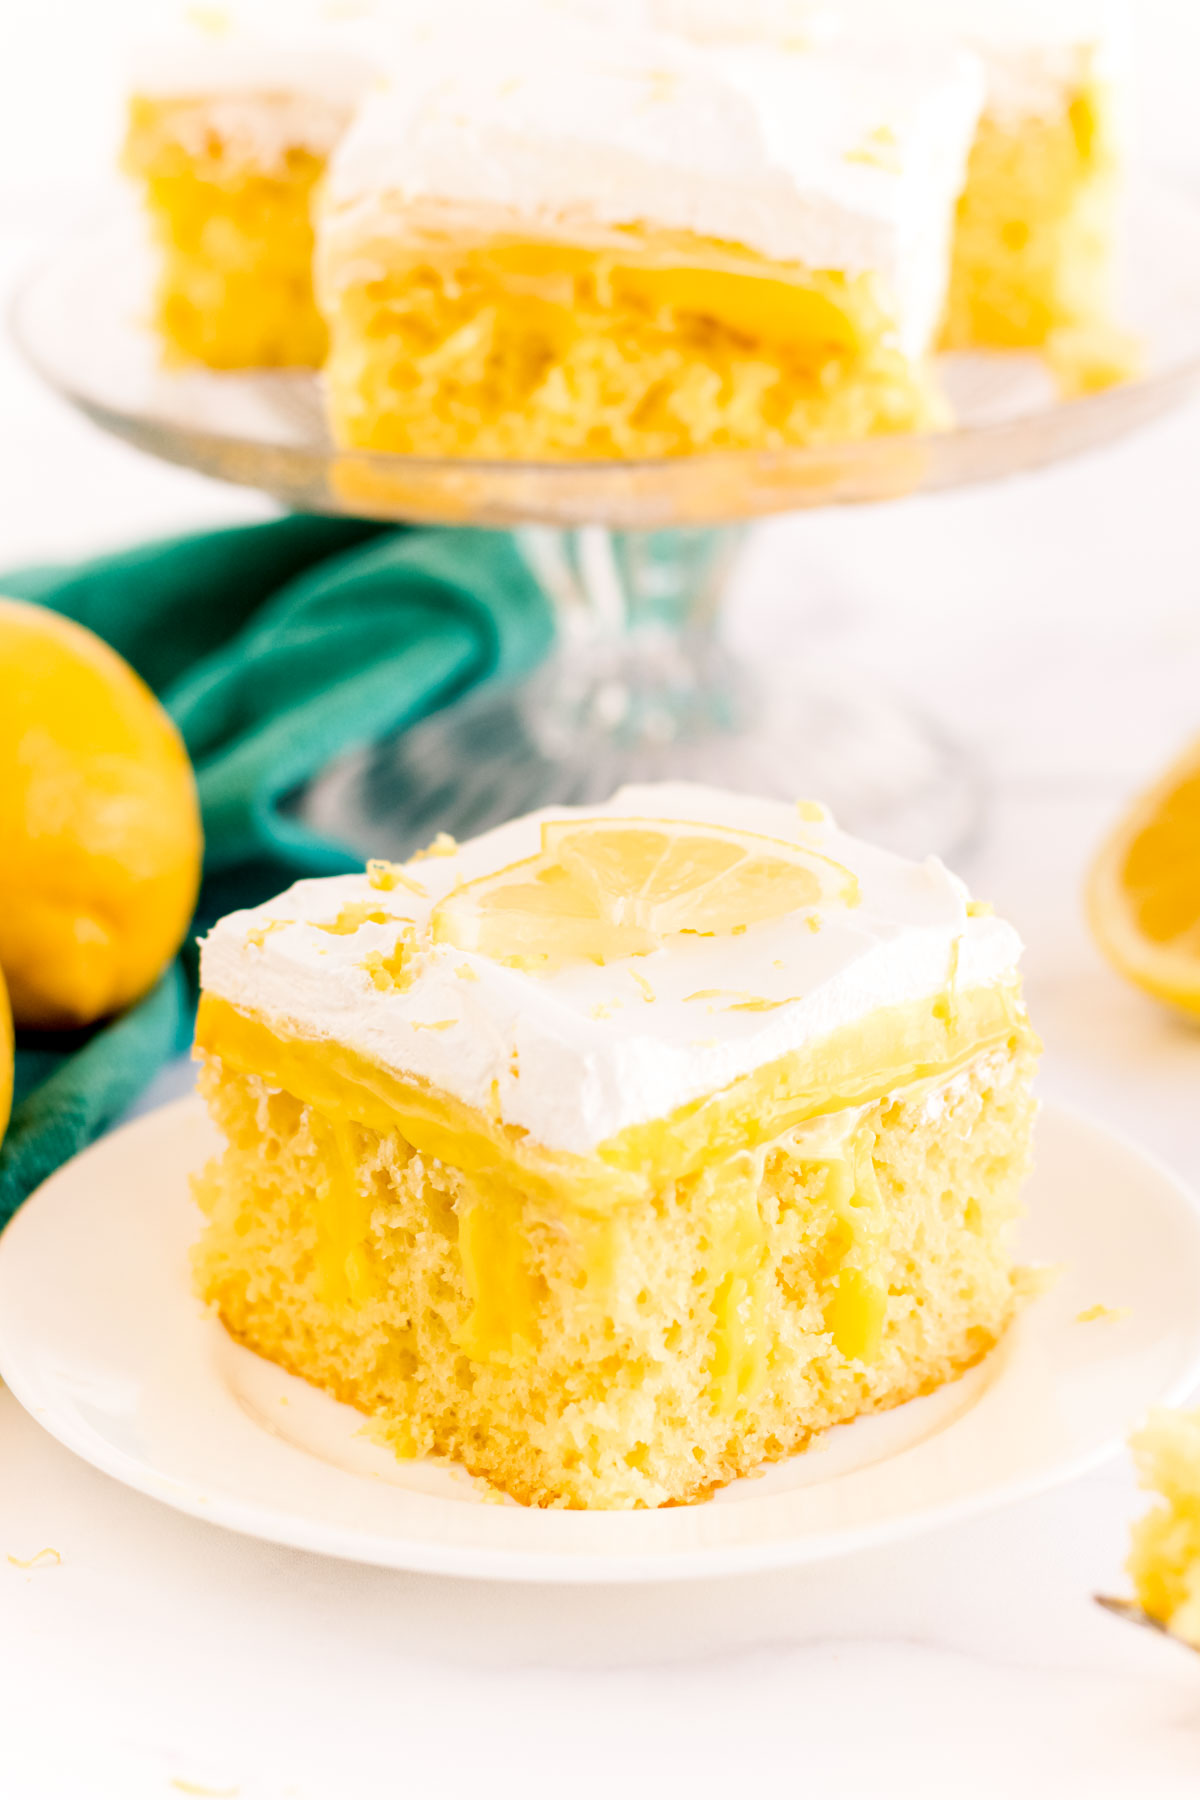 Close up photo of a slice of lemon poke cake on a white plate.